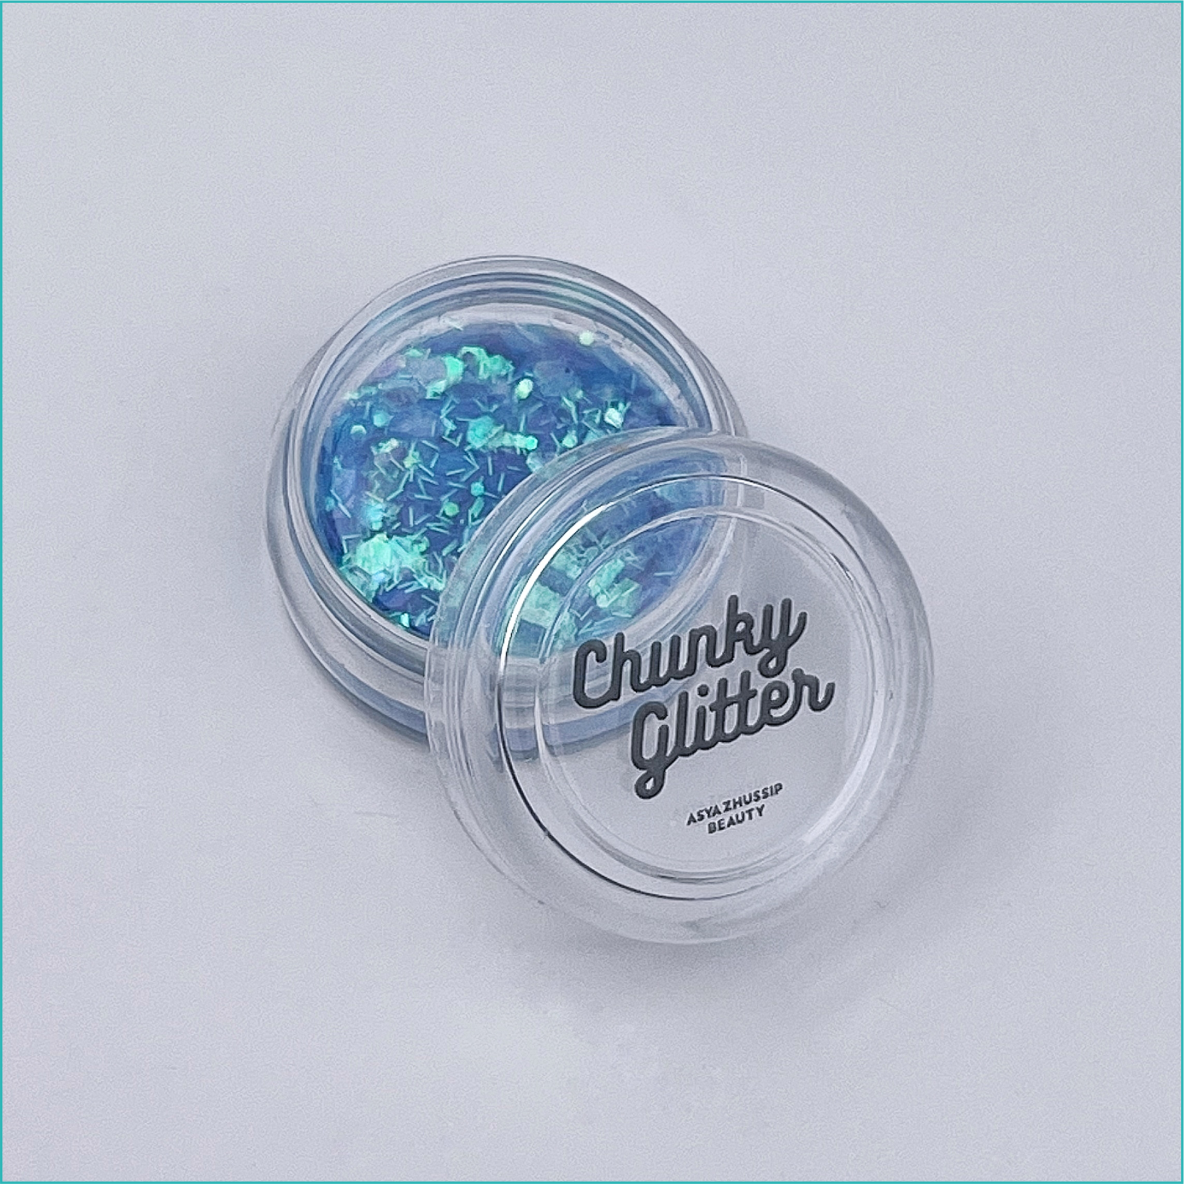 Глиттер ZHUSSIP "Chunky Glitter" (Mg20)